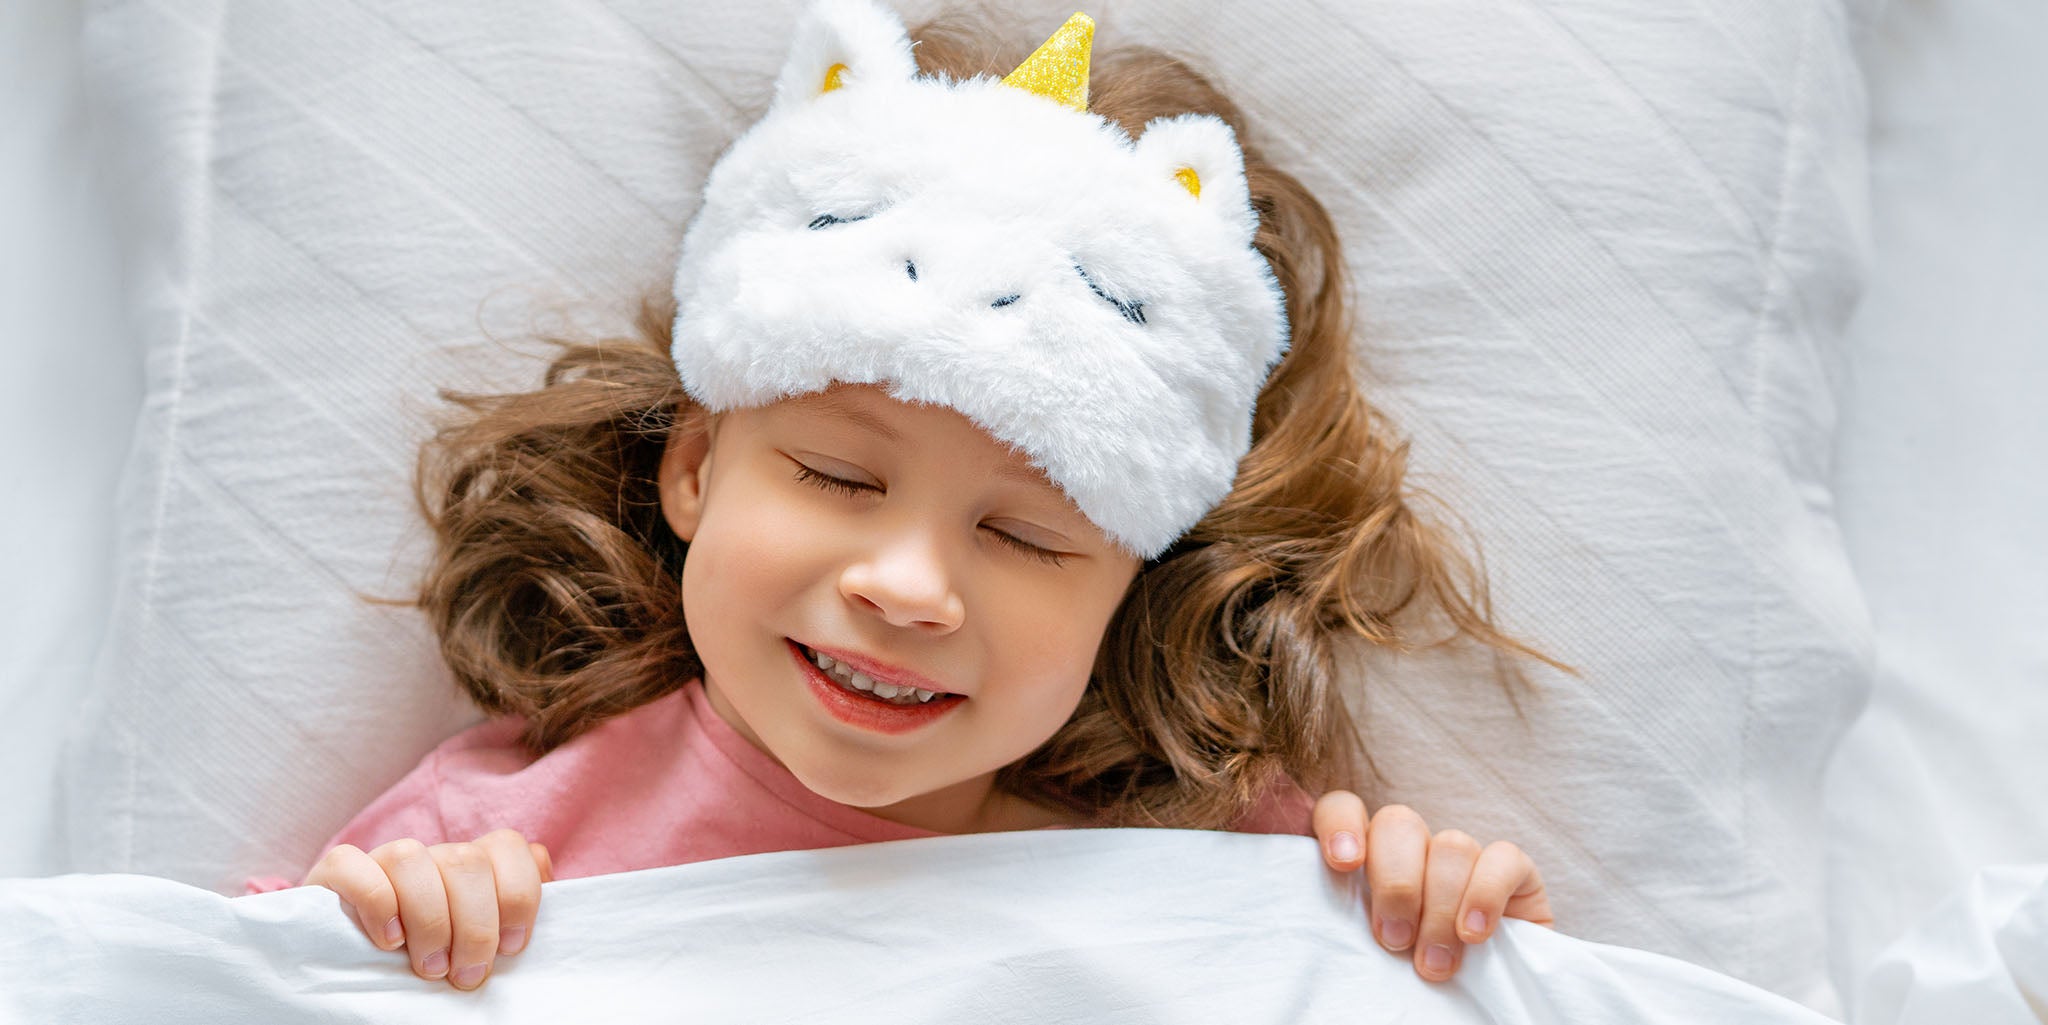 Young child falling asleep with a unicorn eye mask.